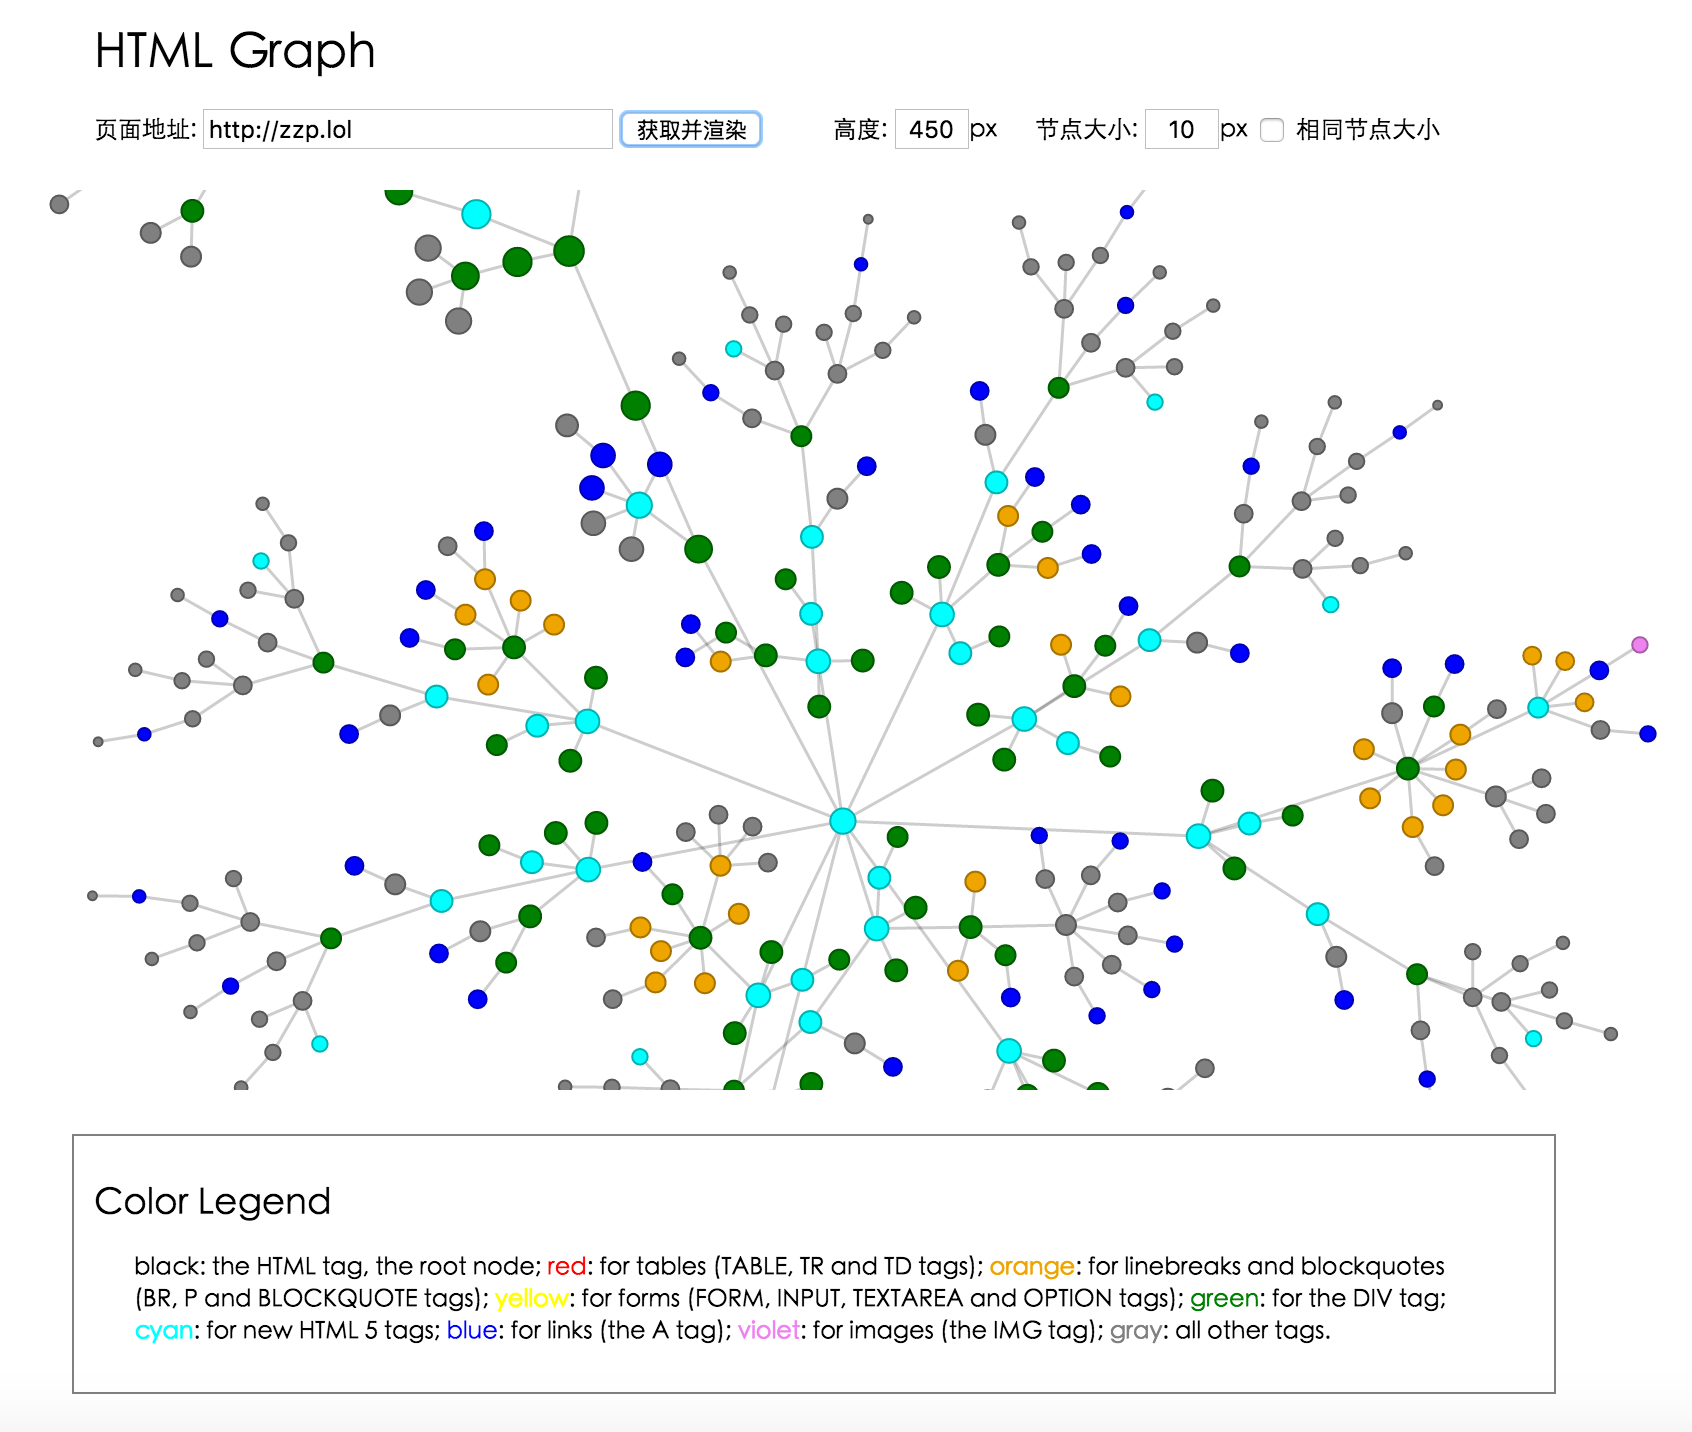 HTML Graph